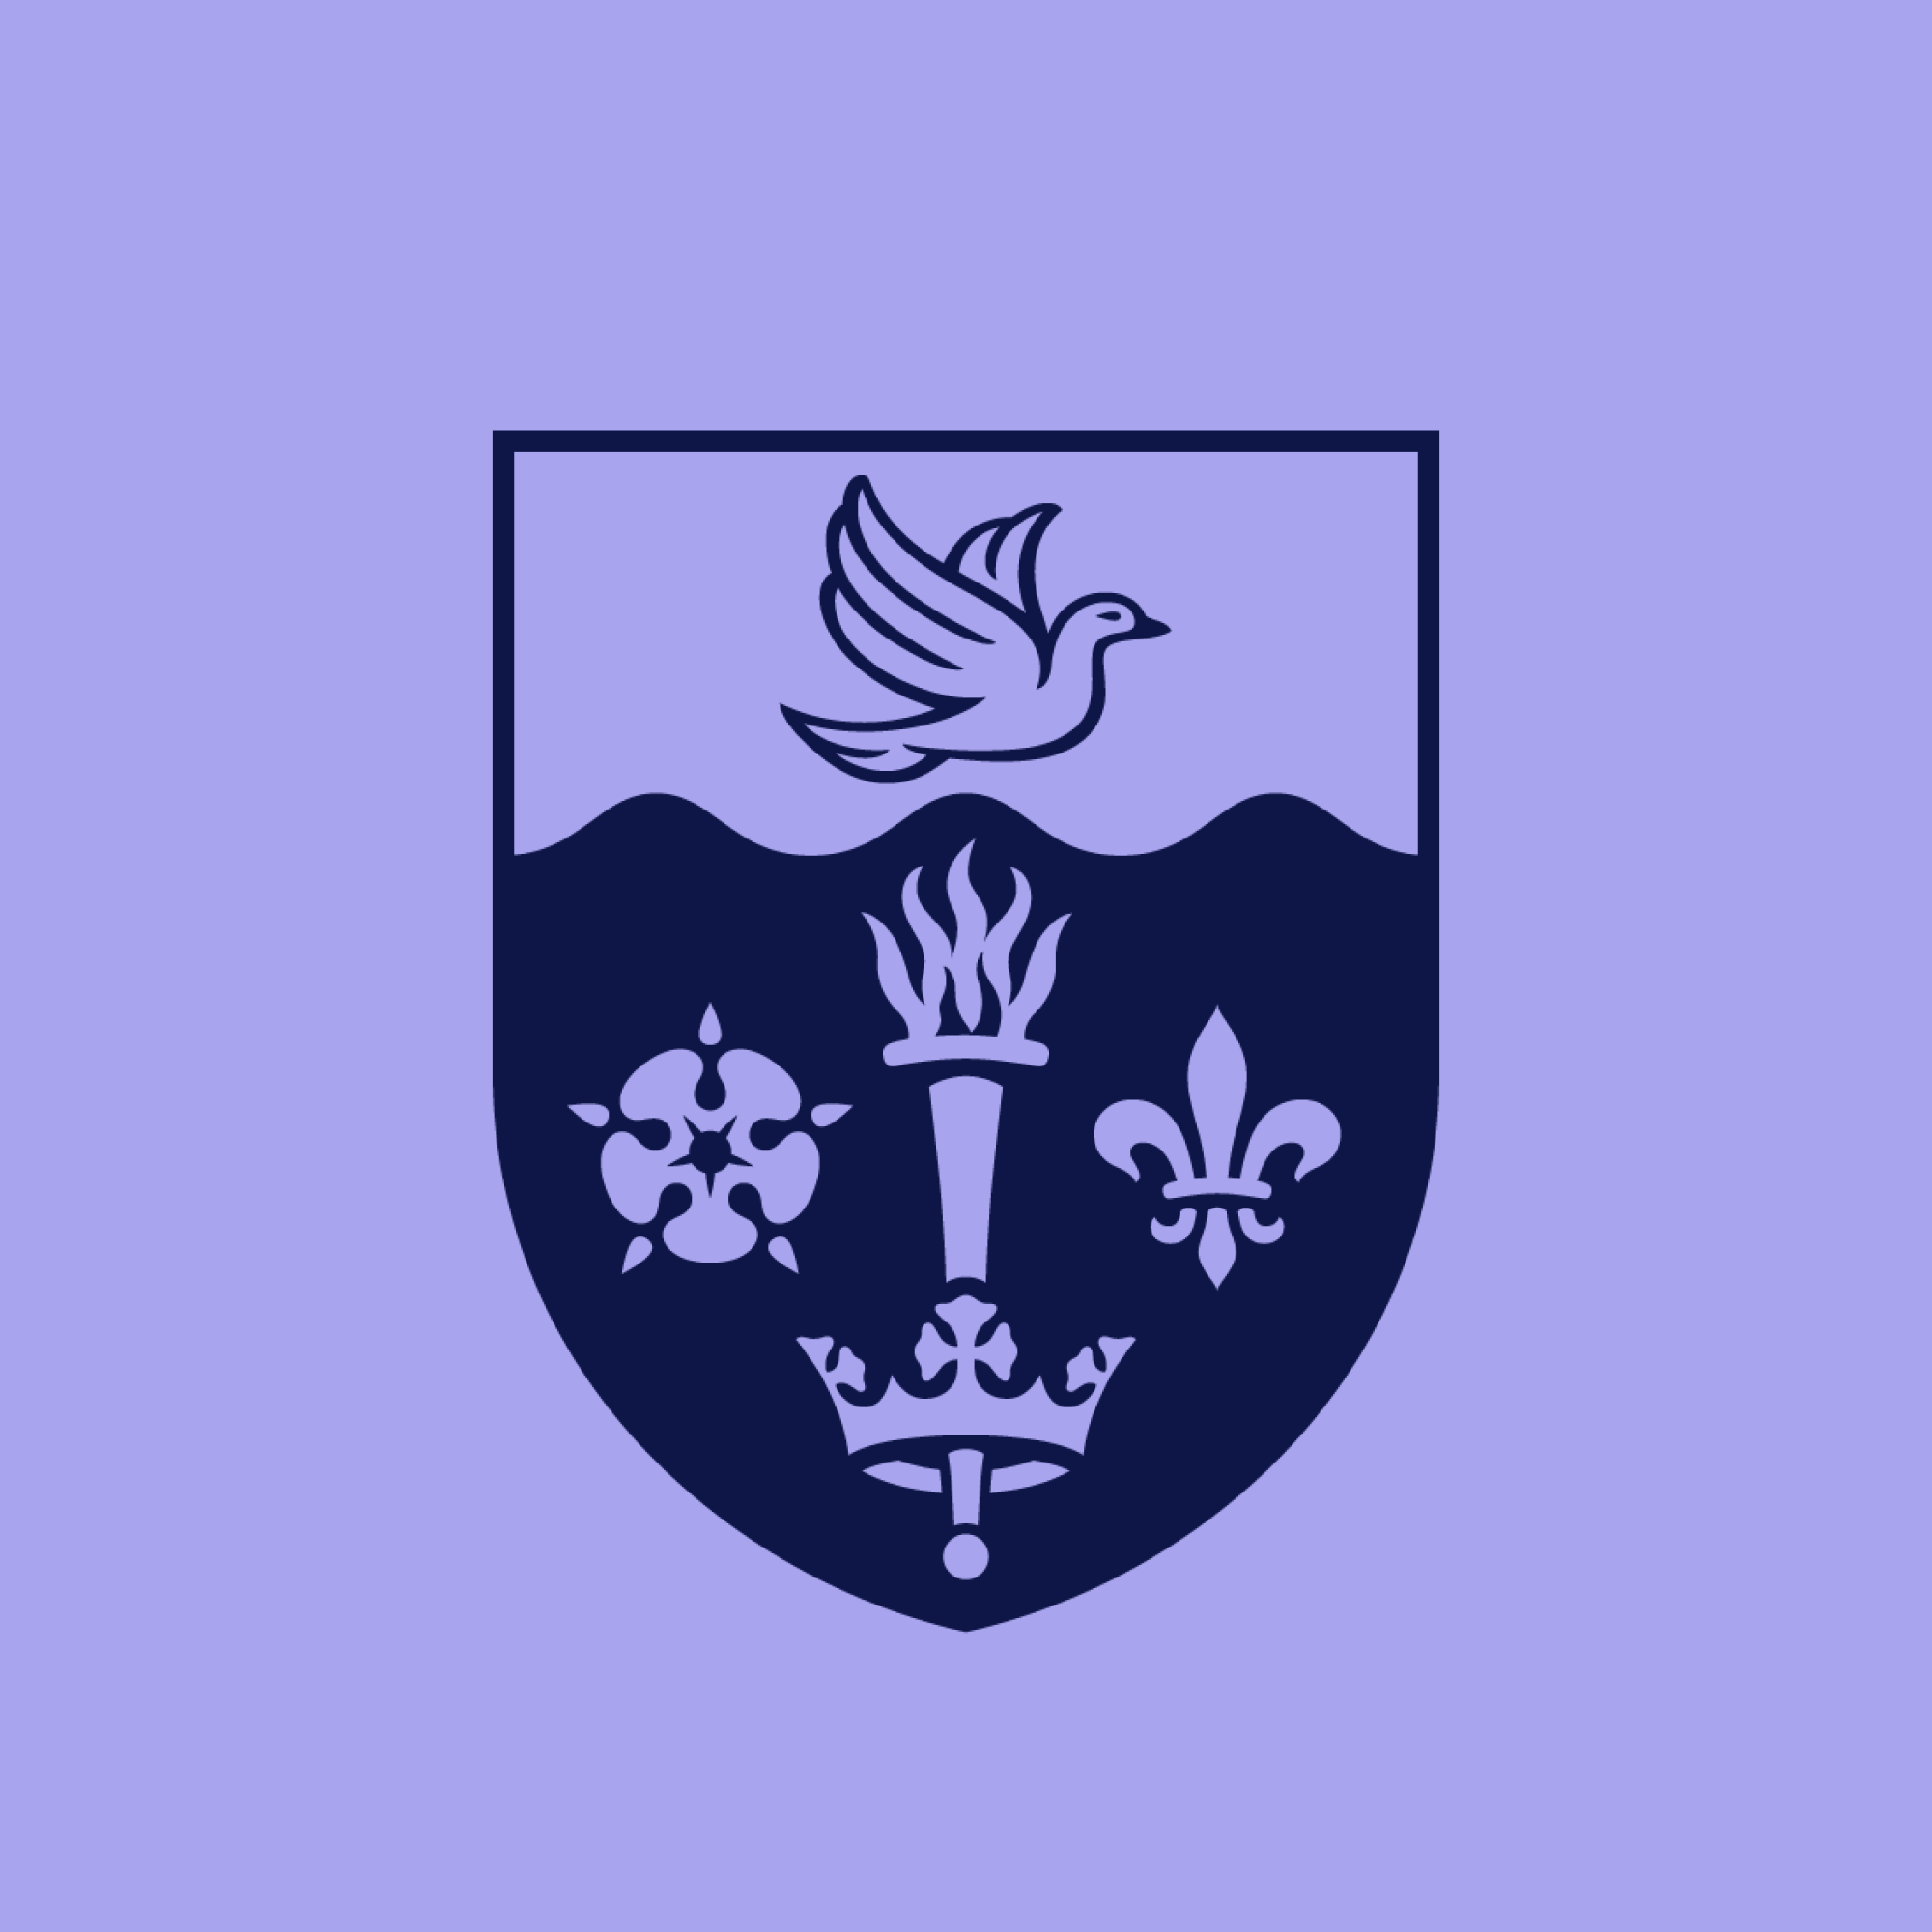 Doctoral College logo